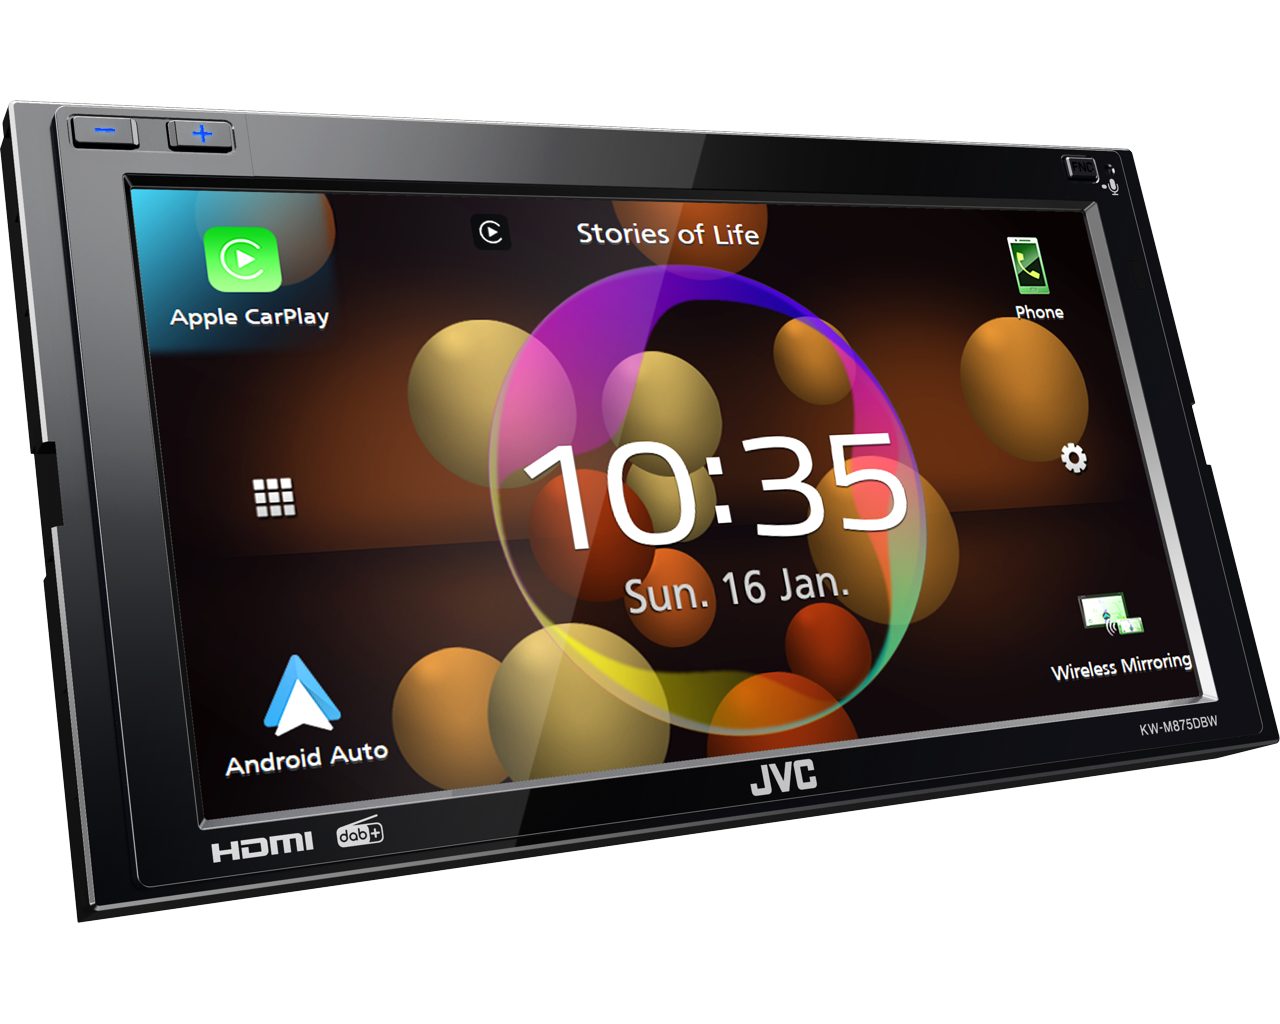 Apple Bluetoaoth JVC CarPlay KW-M875DBW Autoradio DAB+ Android-Auto